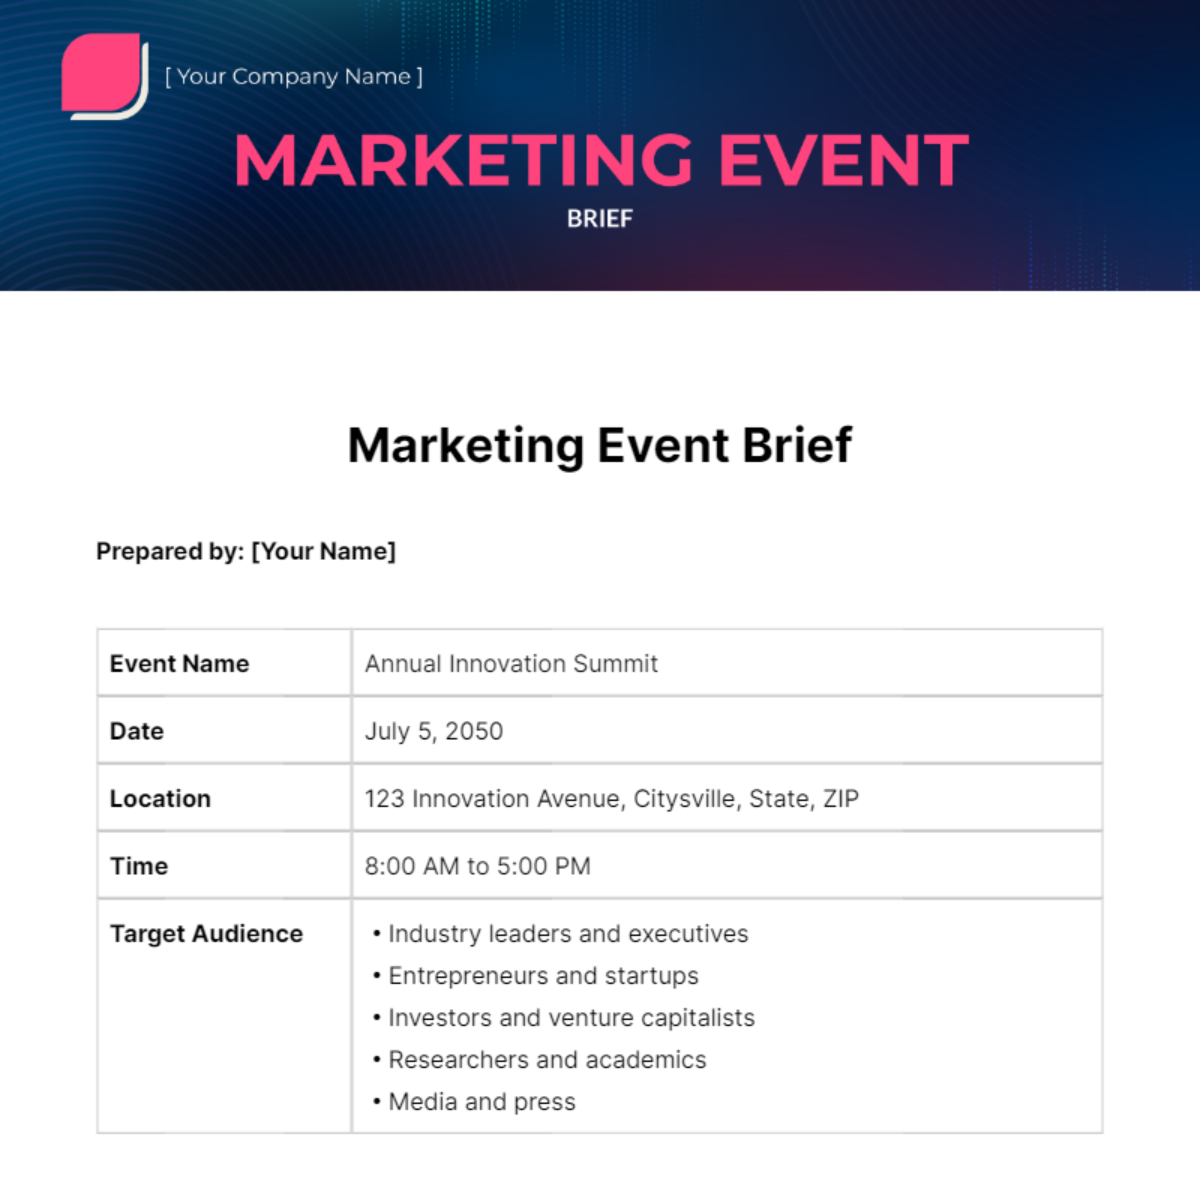 Marketing Event Brief Template